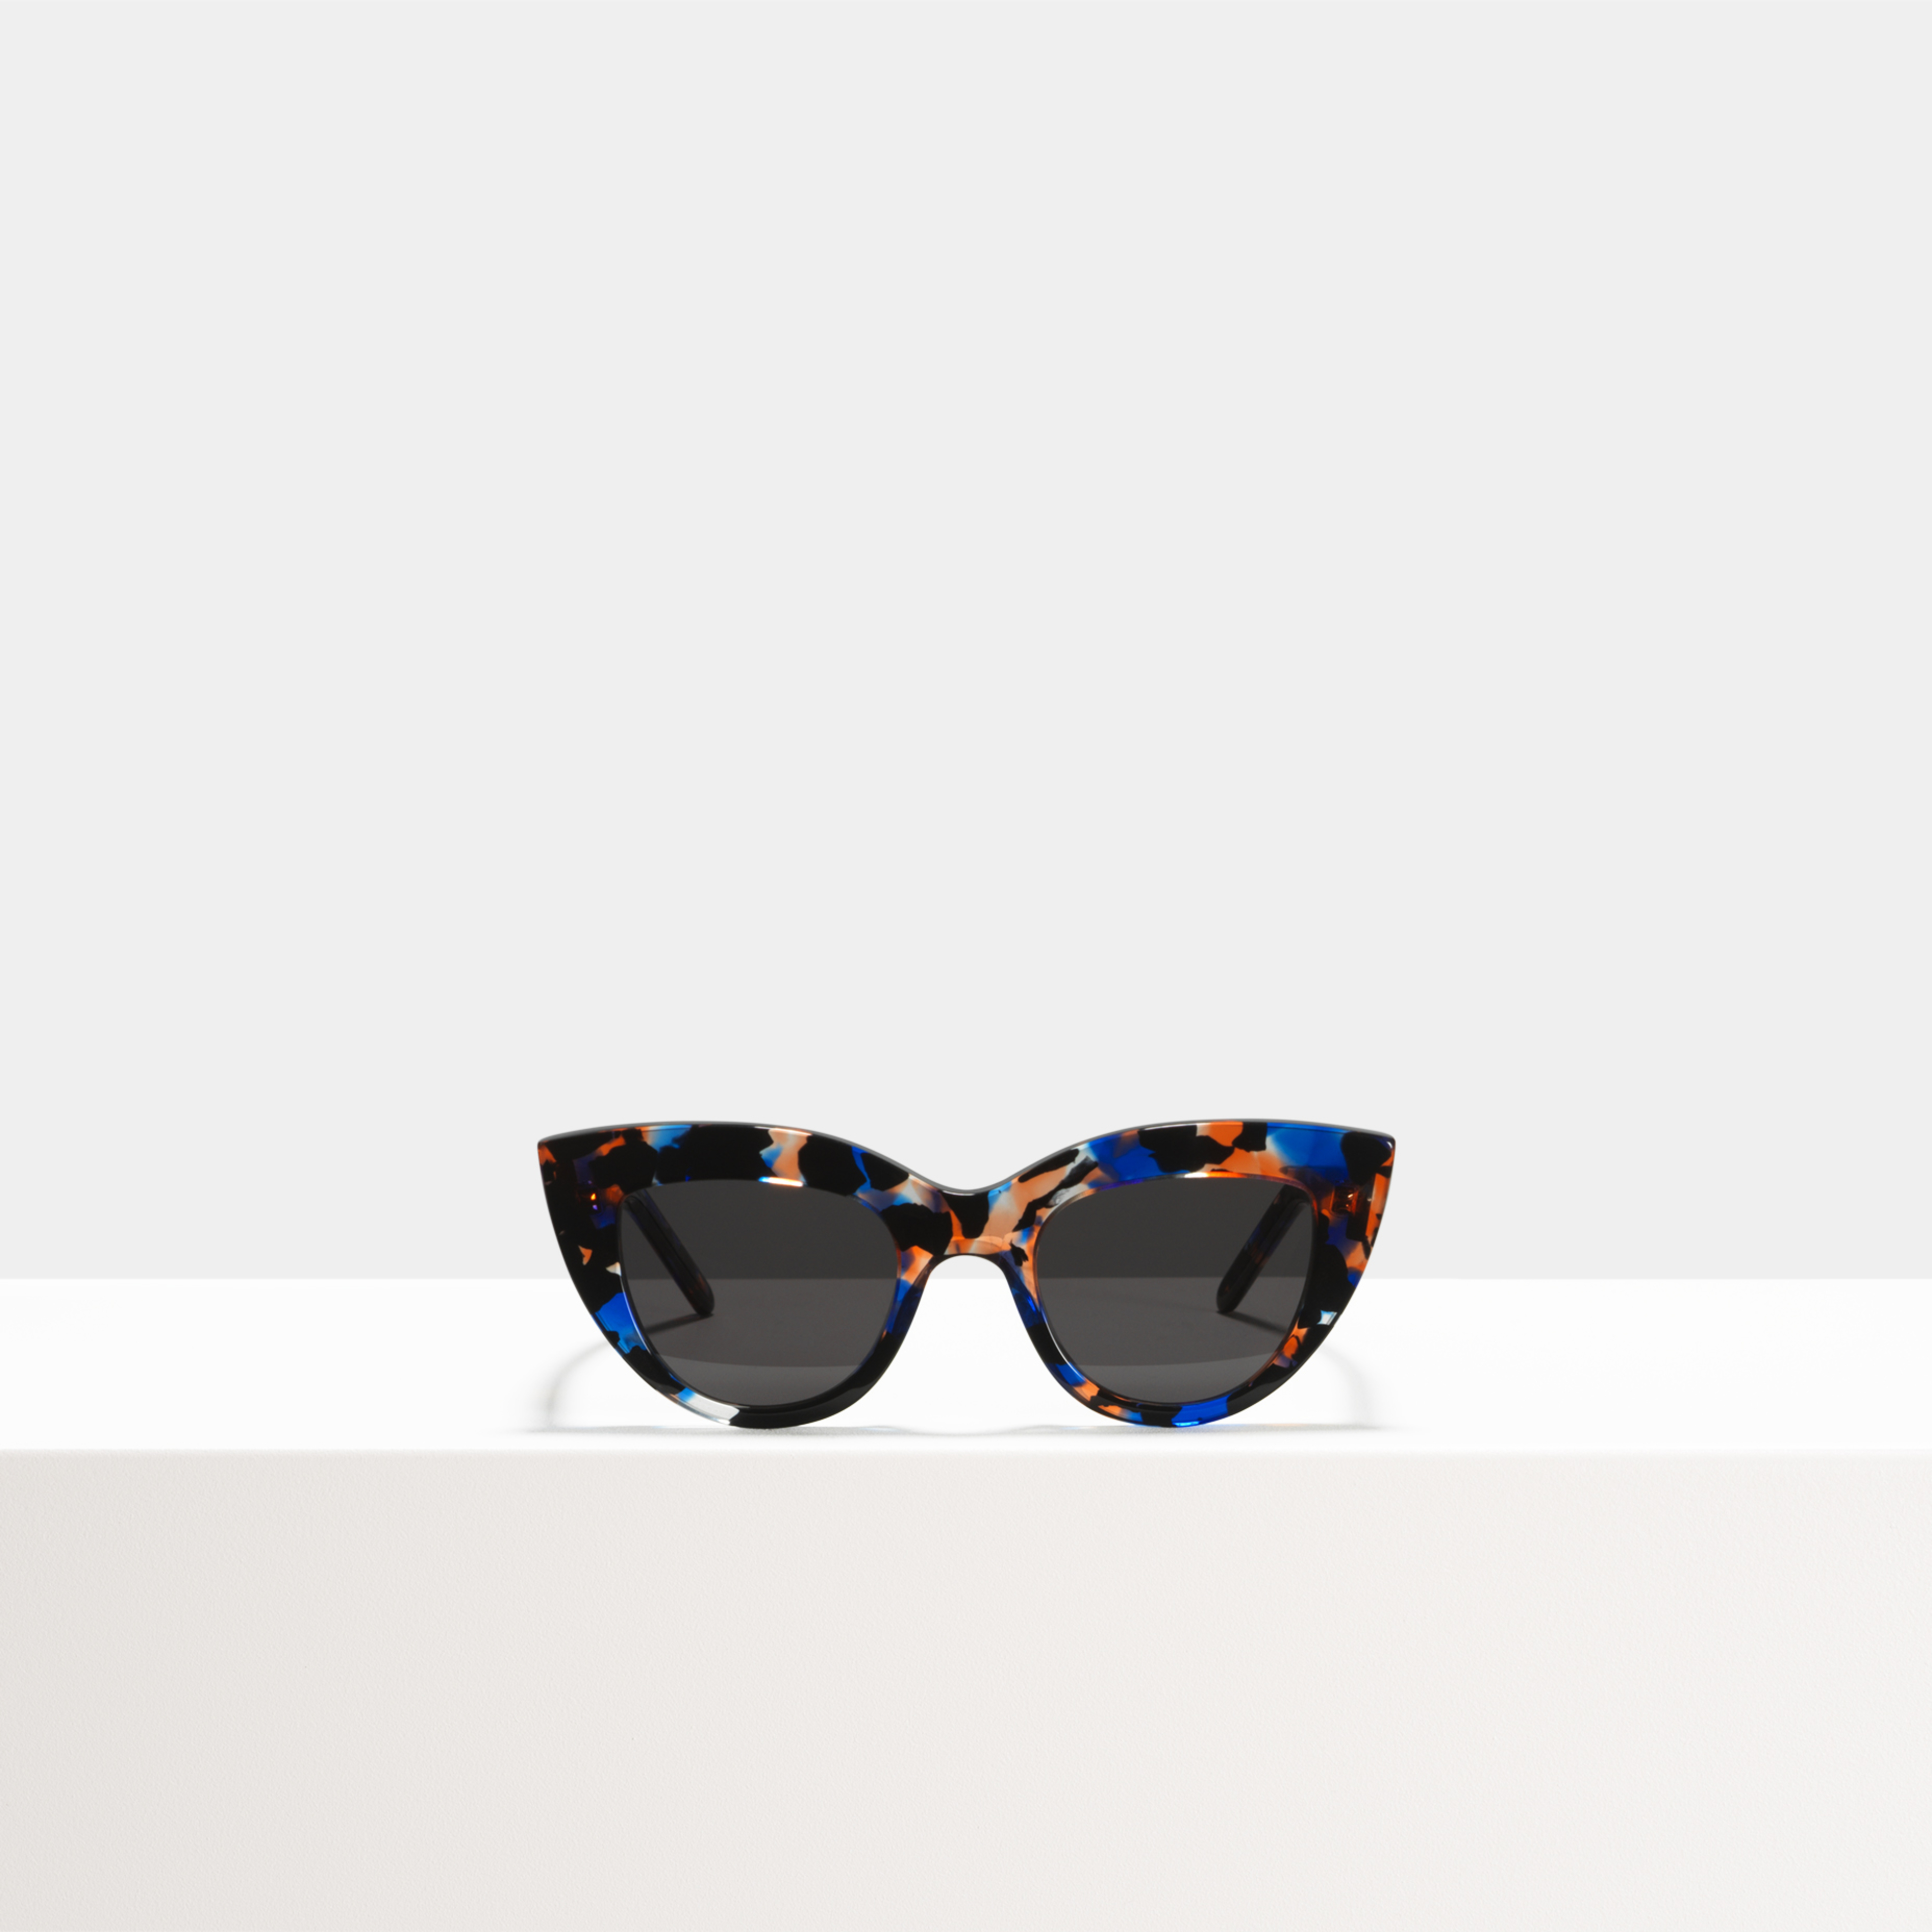 Ace & Tate Sunglasses |  Acetate in Black, Blue, Orange